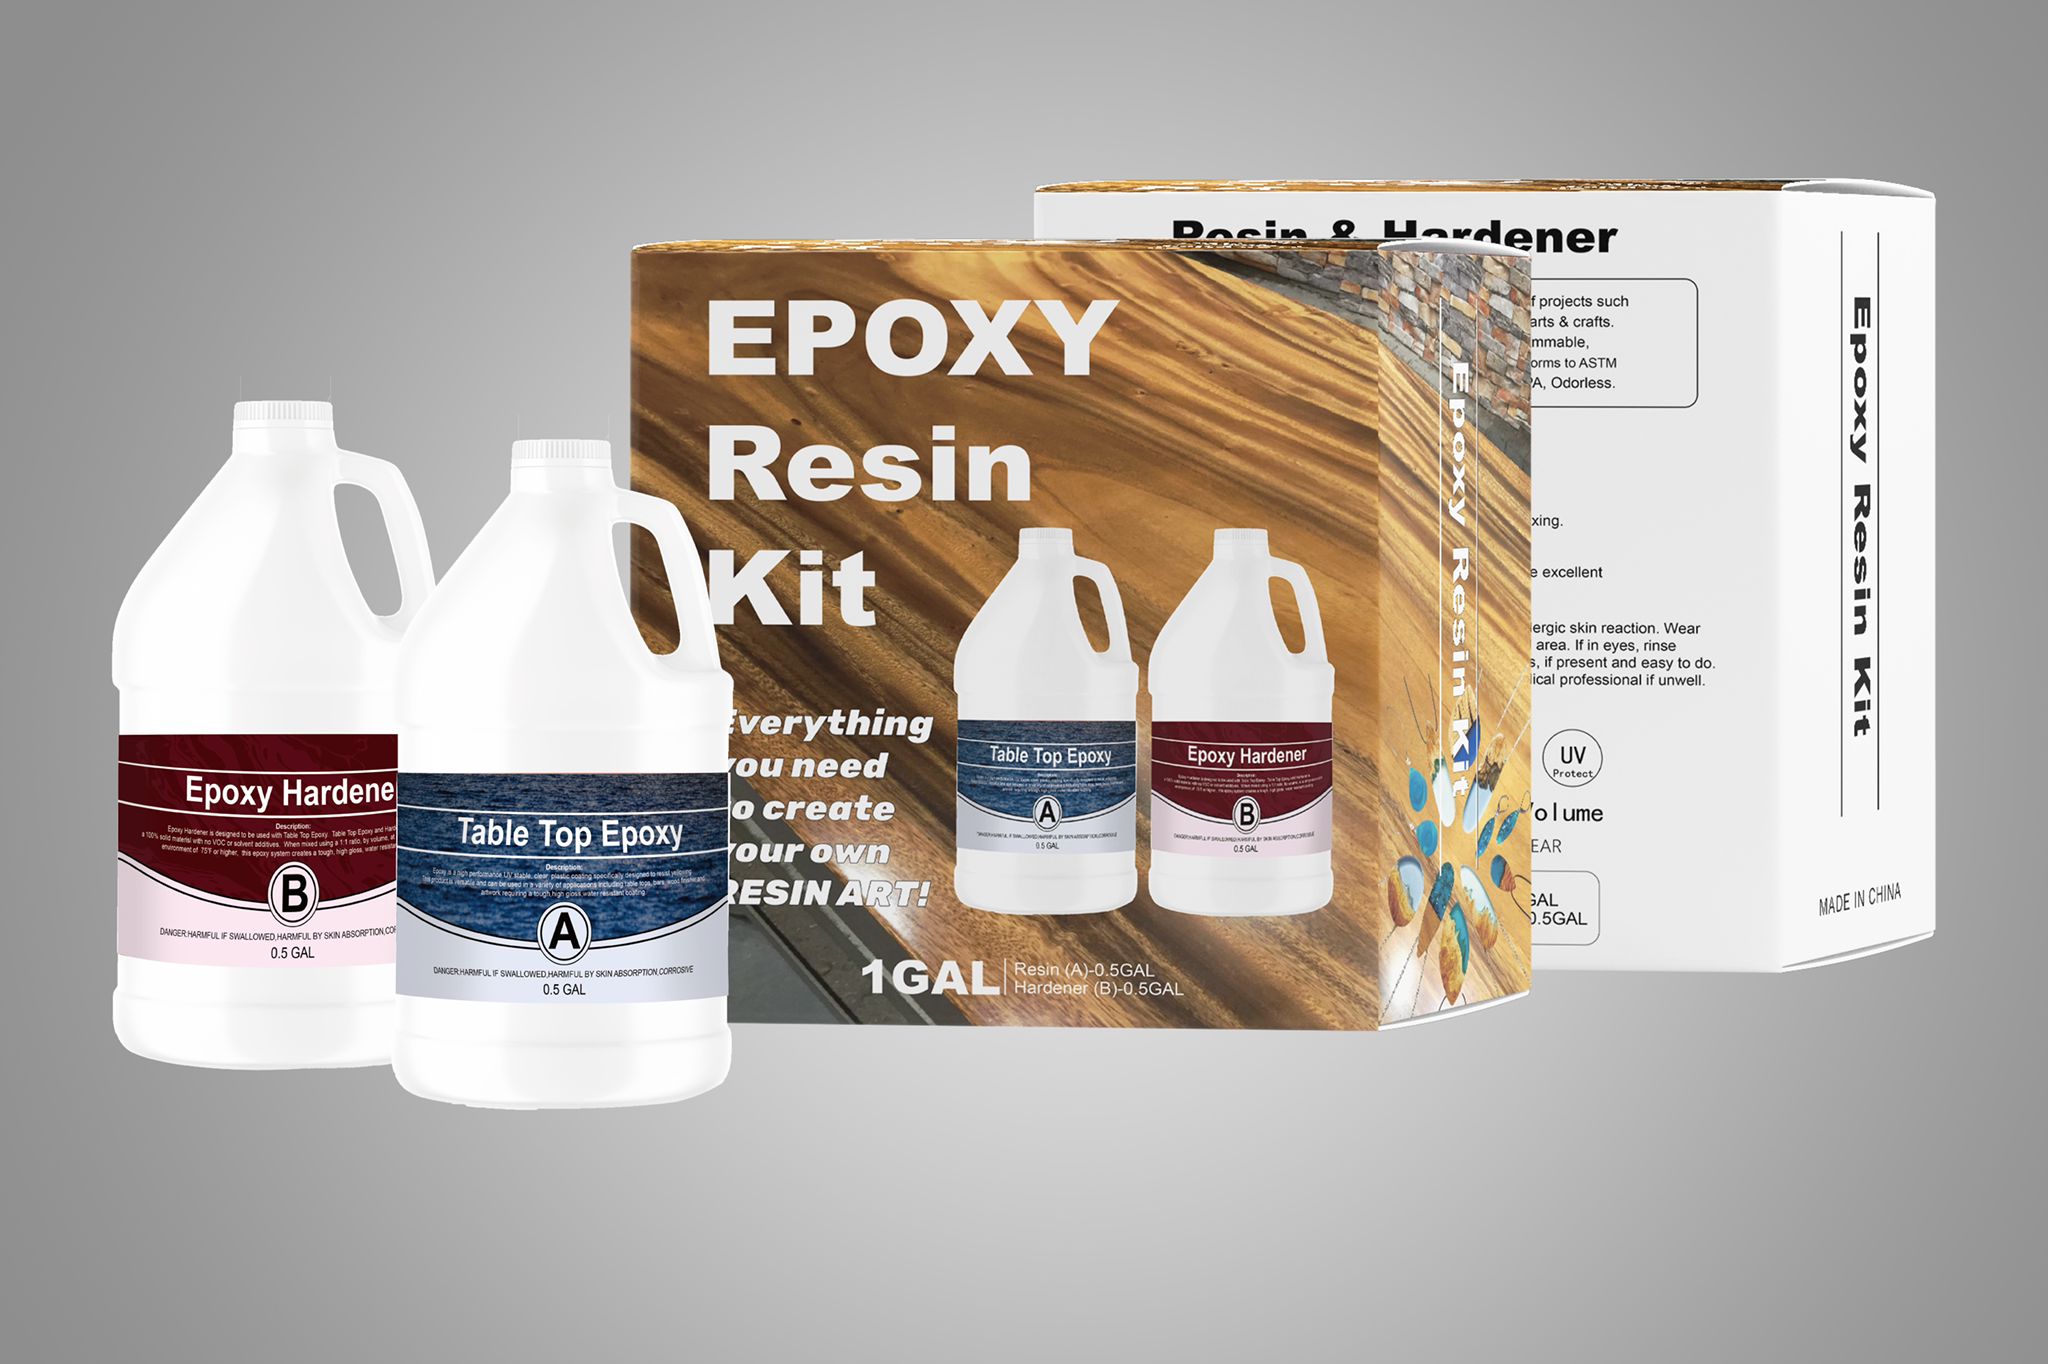 1 Gallon Bottle Art Epoxy Resin Clear Non Toxic 0.5 gal Resin +